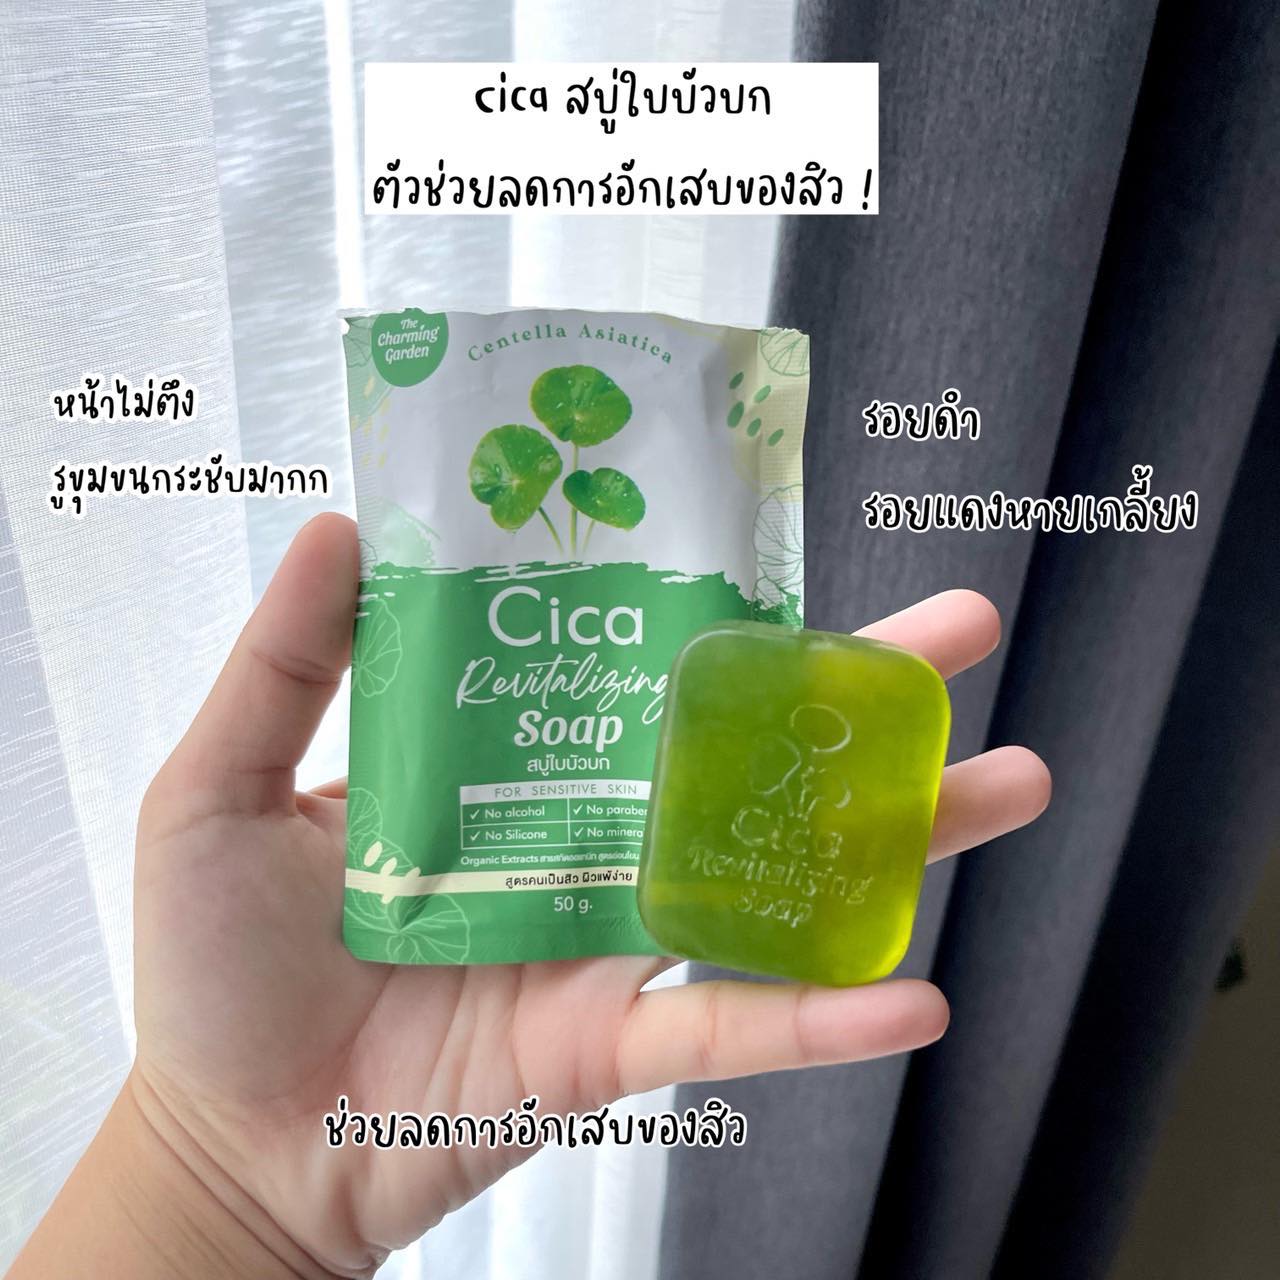 Cica Revitalizing Soap- 50g